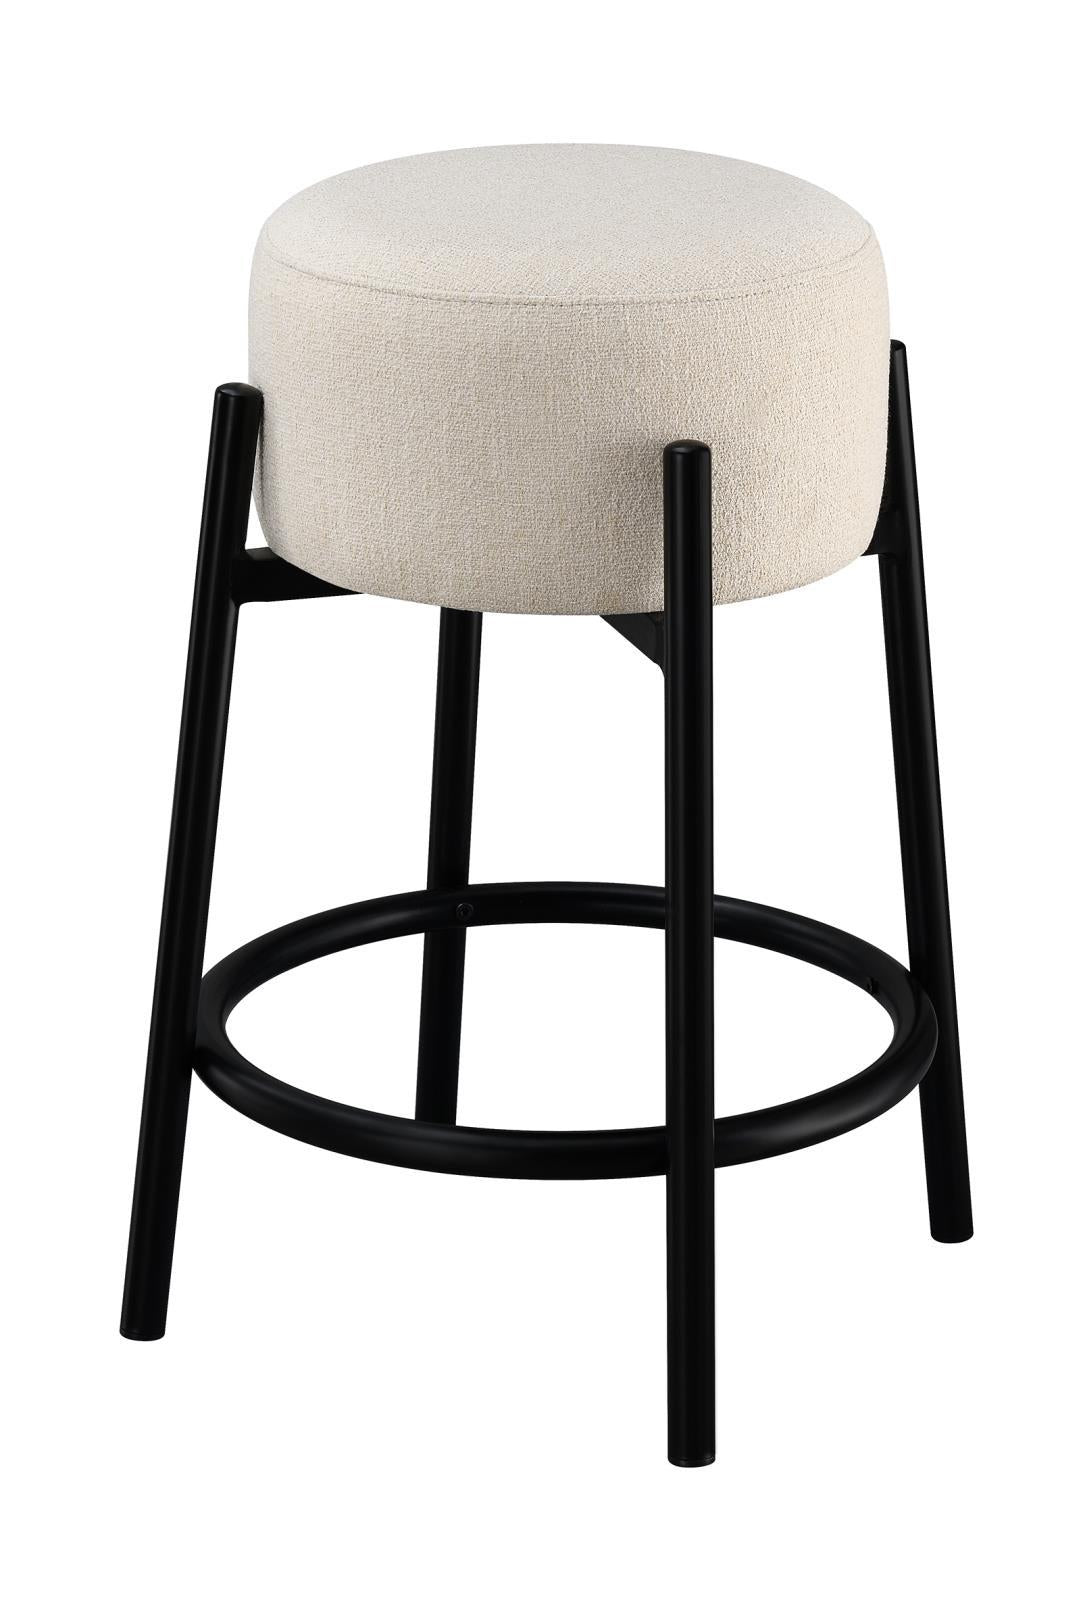 Leonard Upholstered Backless Round Stools White and Black (Set of 2) - Half Price Furniture